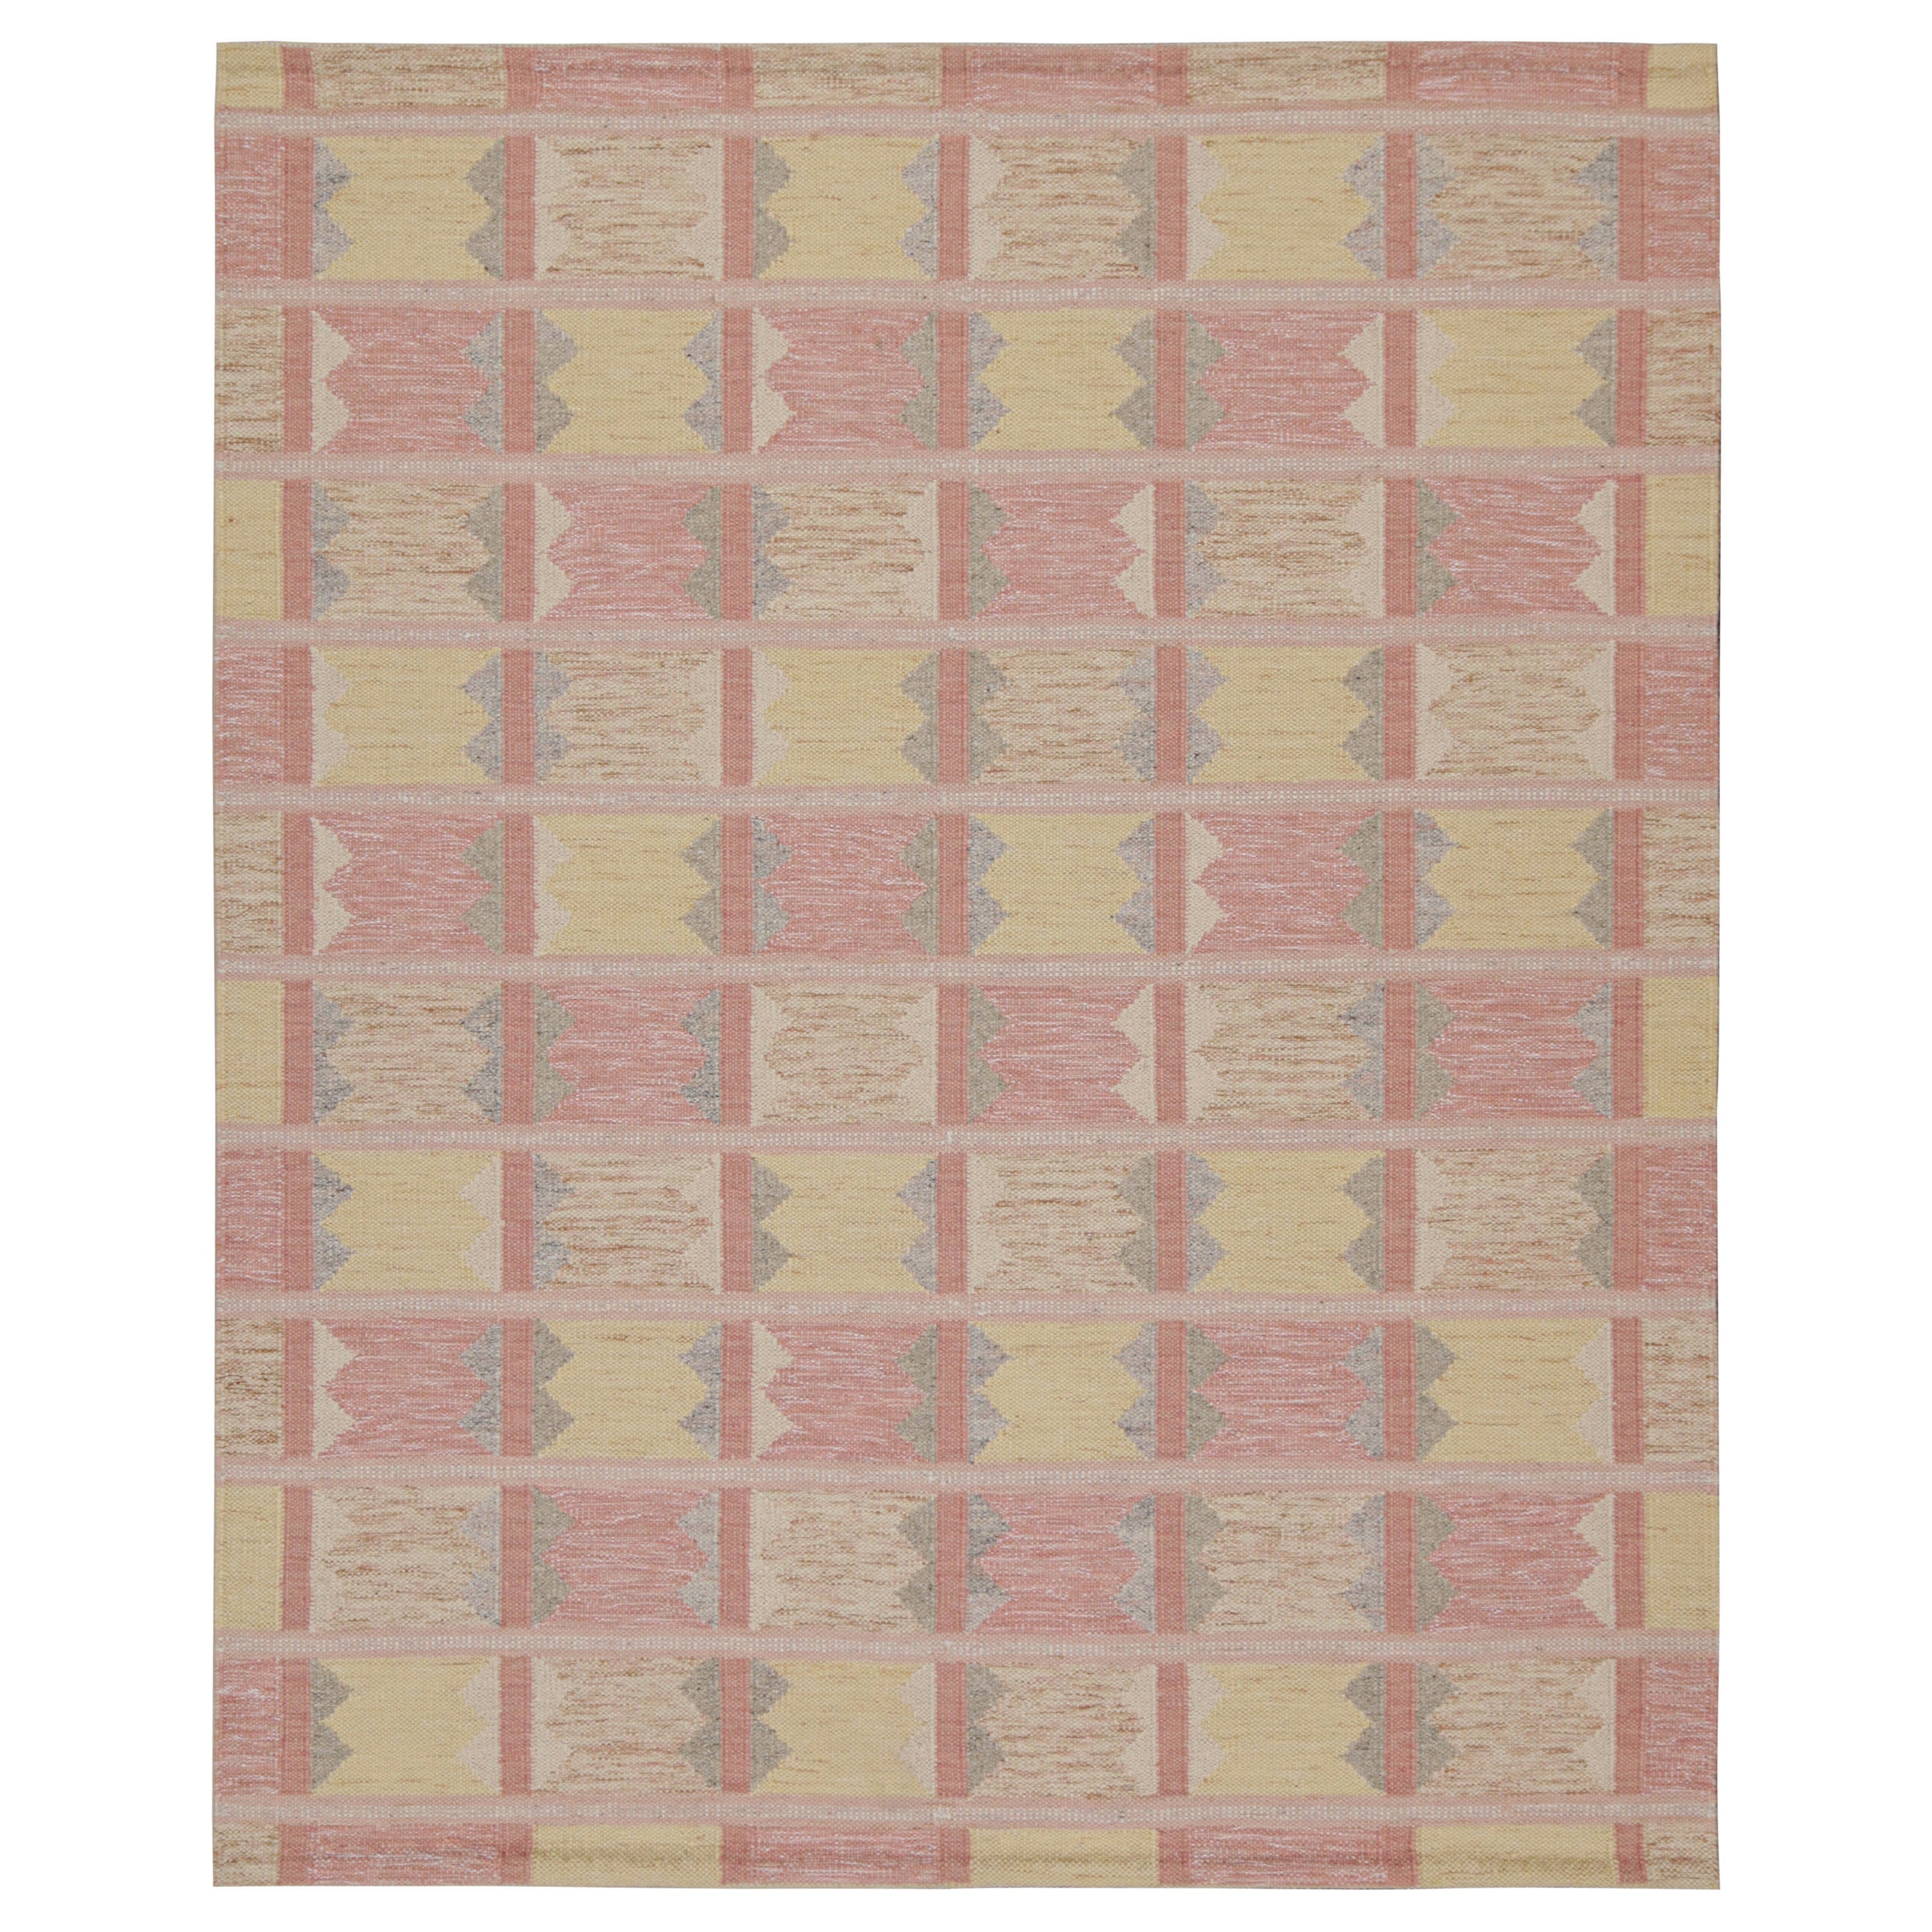 Rug & Kilim’s Scandinavian Style Kilim in Cream and Pink Geometric Patterns